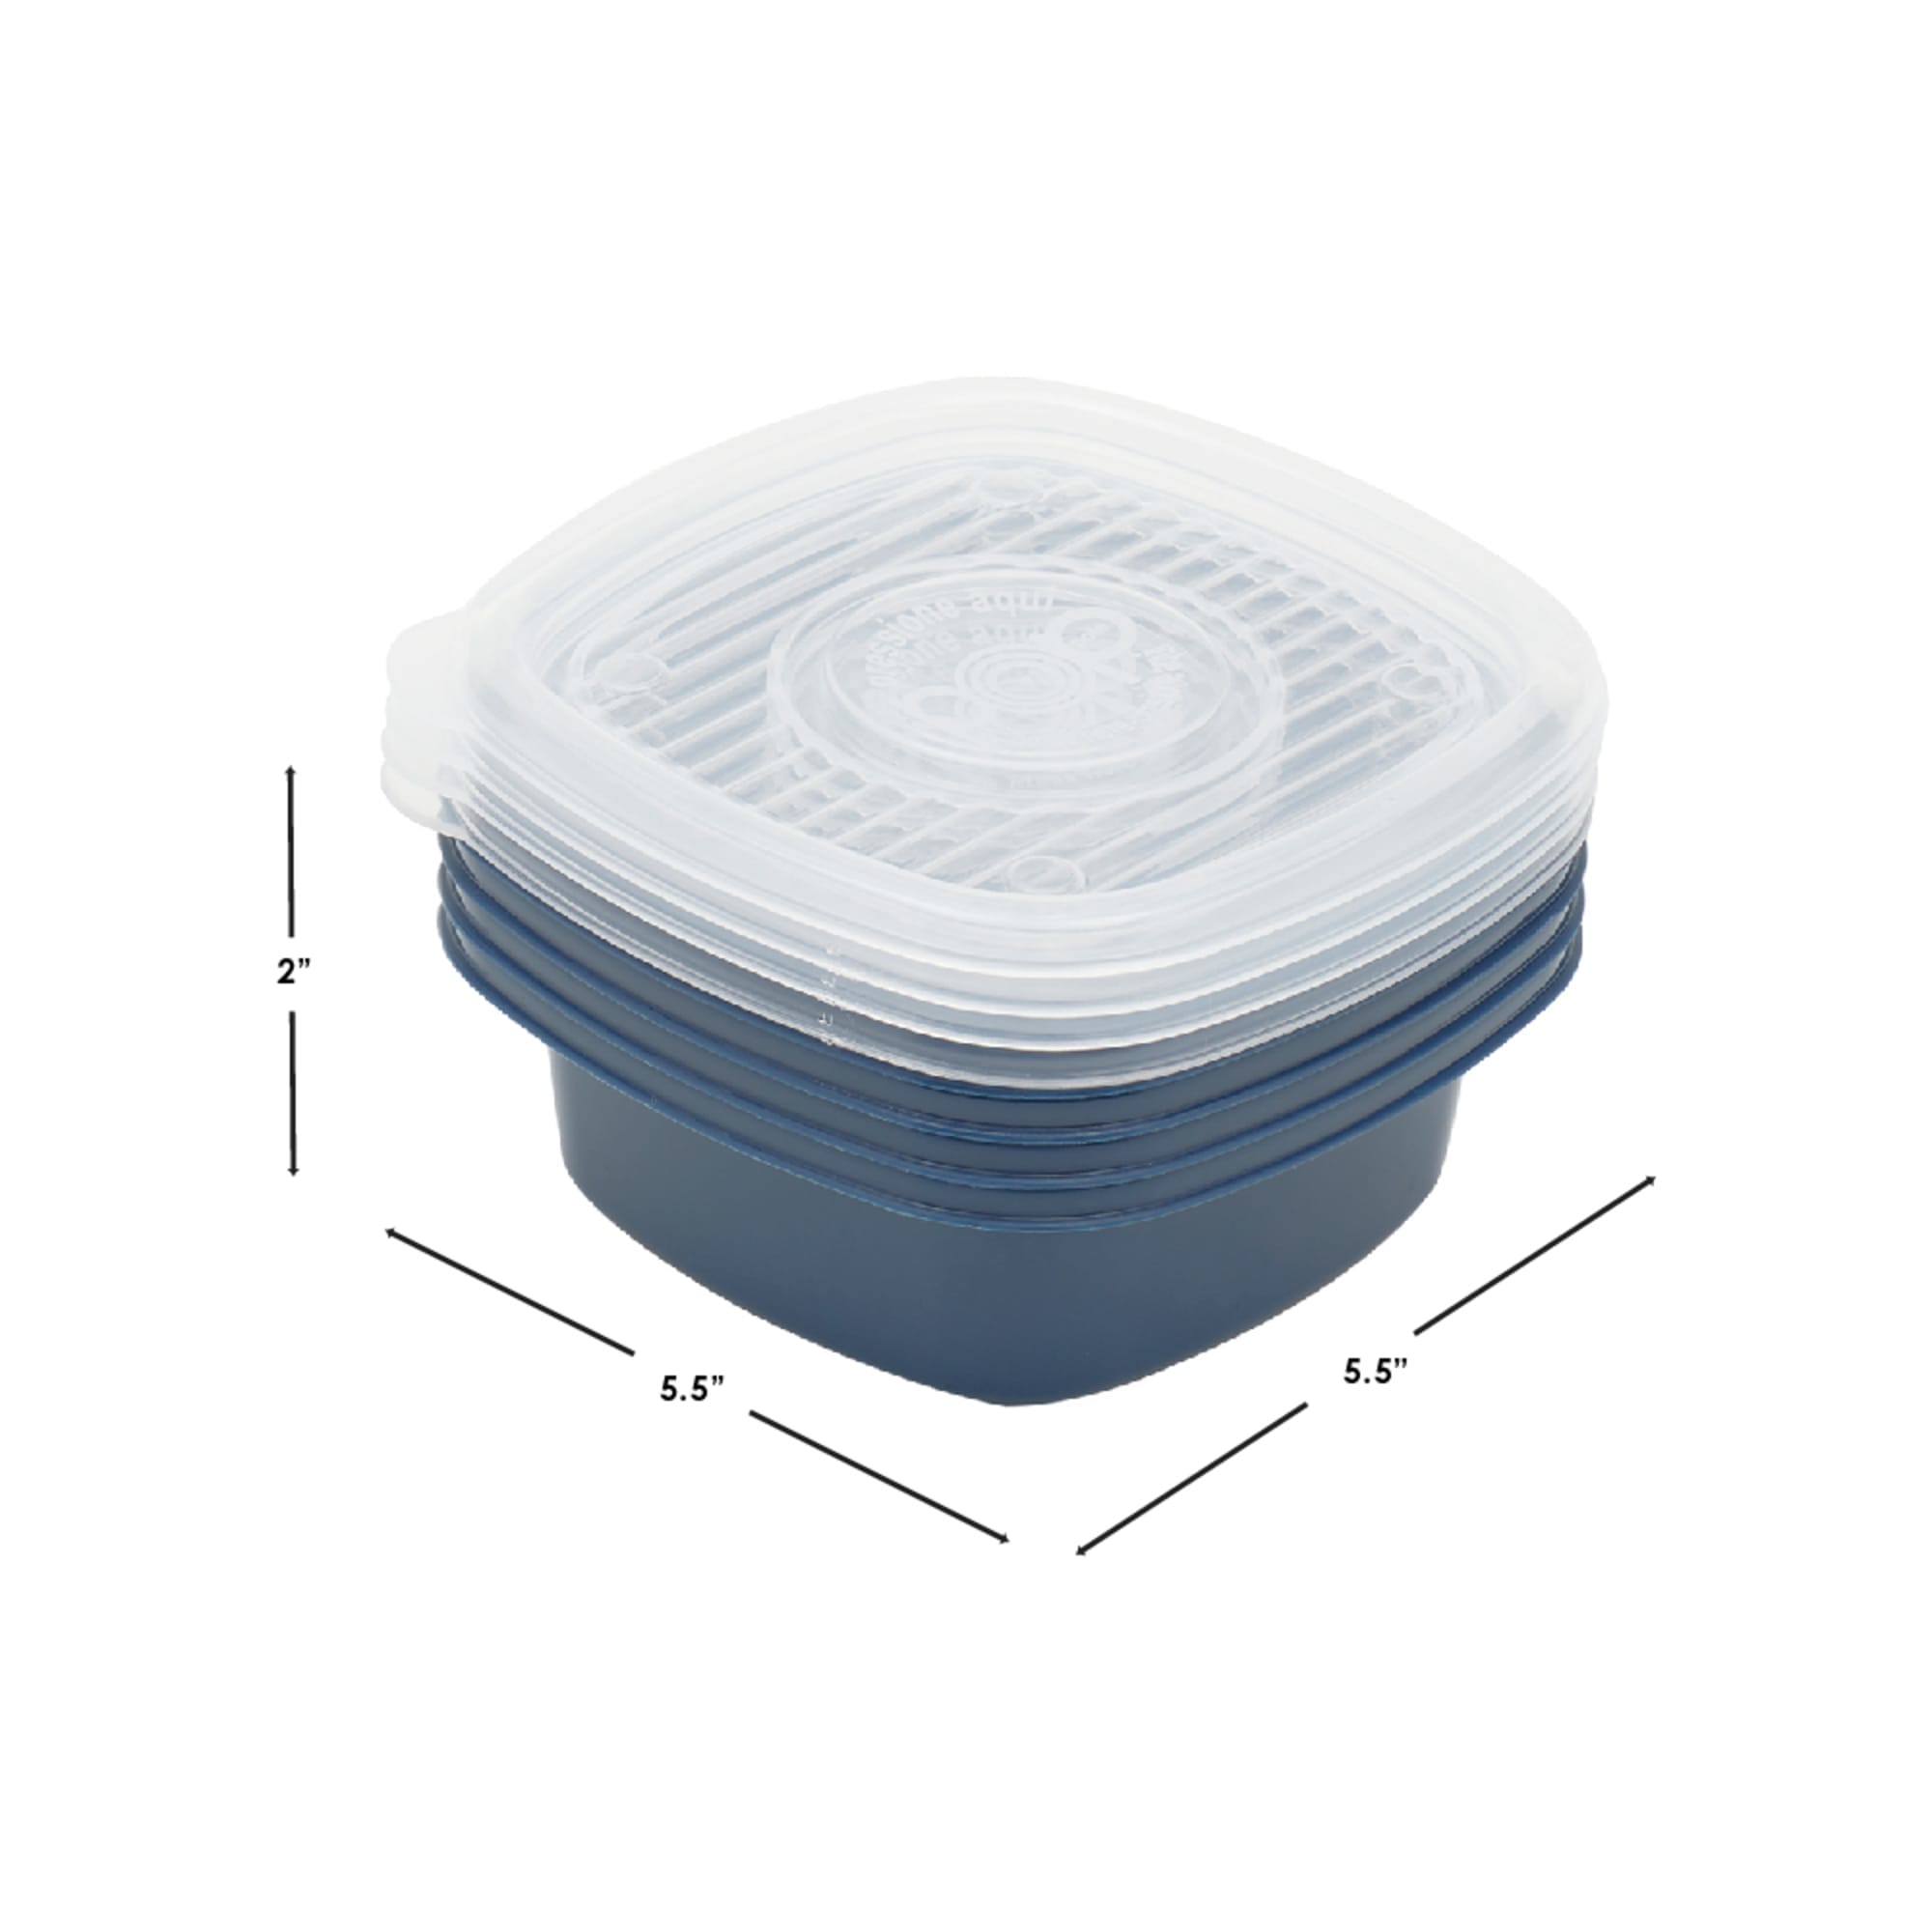 Home Basics 8 Piece Square Plastic Meal Prep Set, (13.5 oz), Blue $5 EACH, CASE PACK OF 8